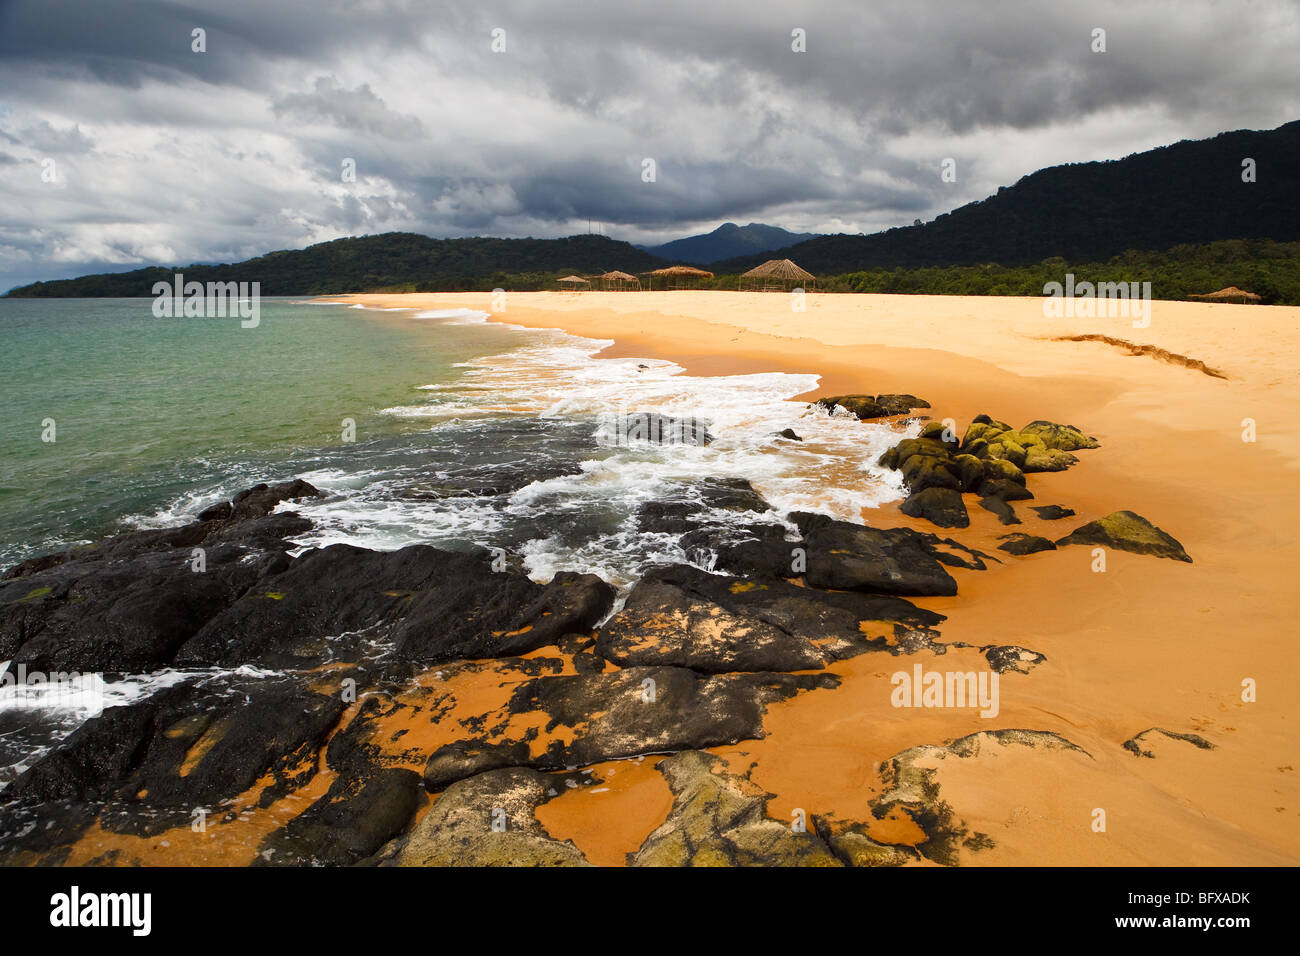 John gehorchen Strand, Halbinsel Freetown, Sierra Leone Stockfoto